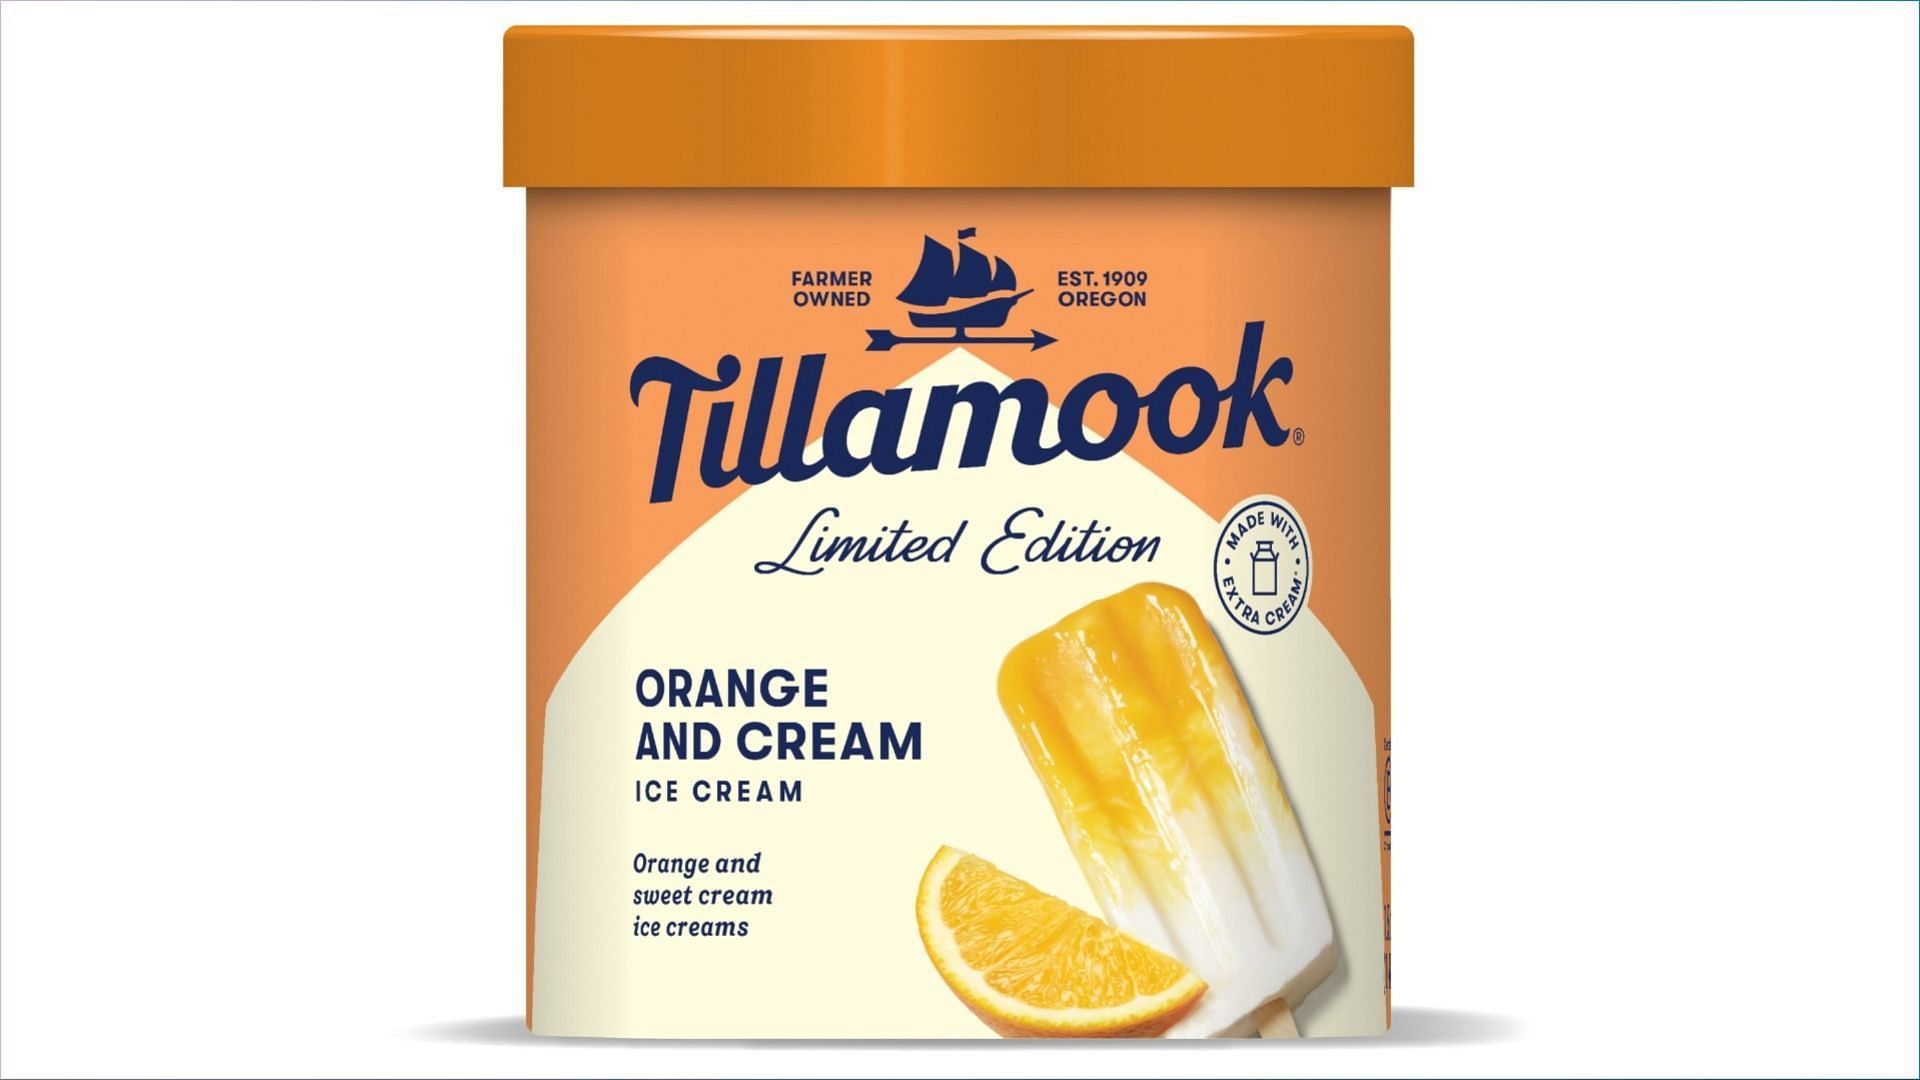 The new Orange and Cream ice cream (Image via TCCA)